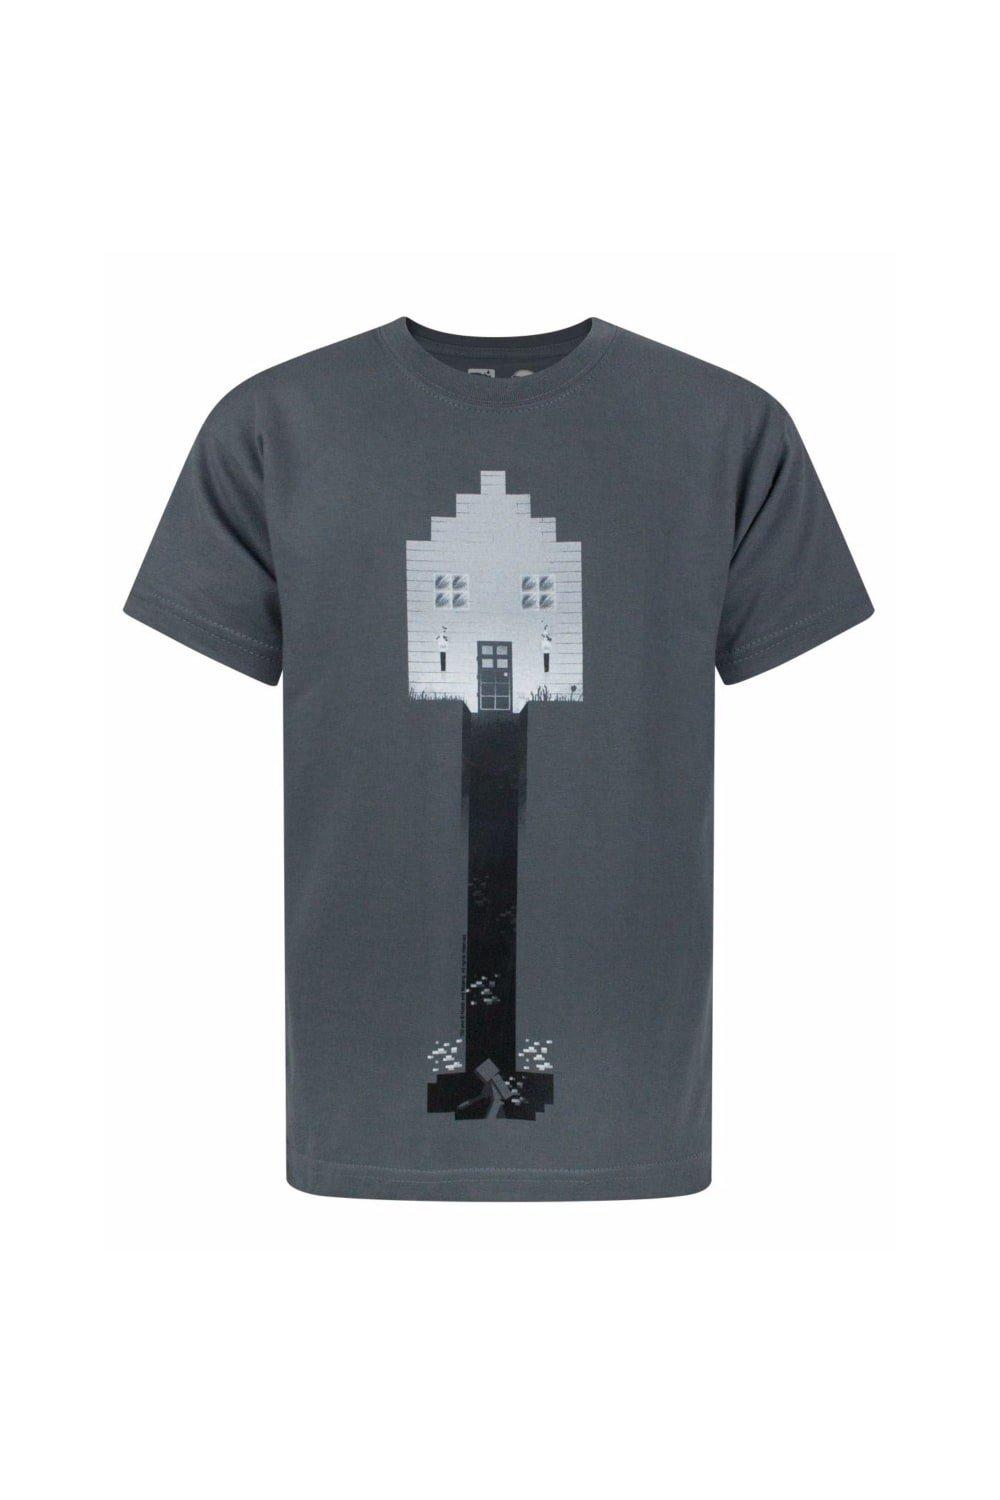 Official Shovel Design T-Shirt